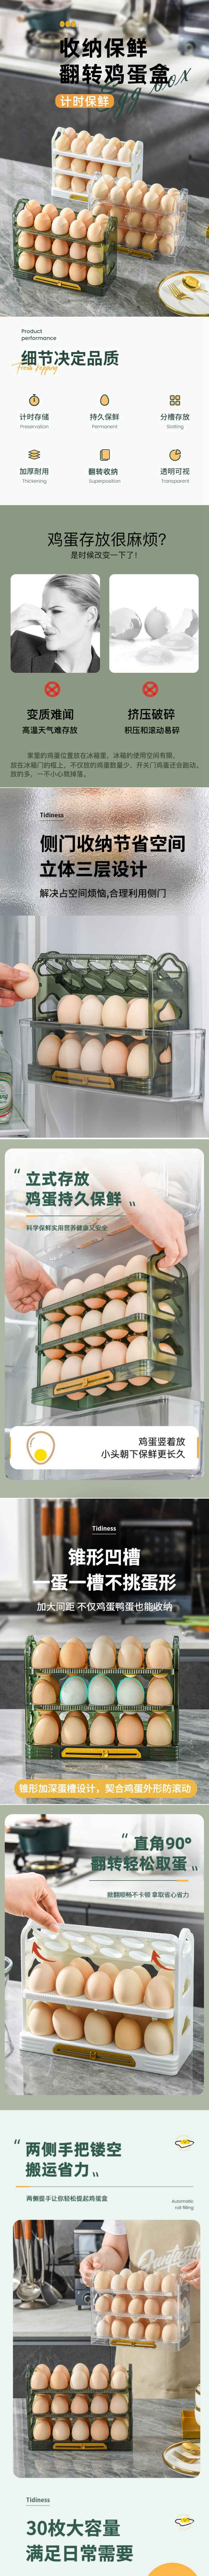  FantianHome 3层鸡蛋收纳盒